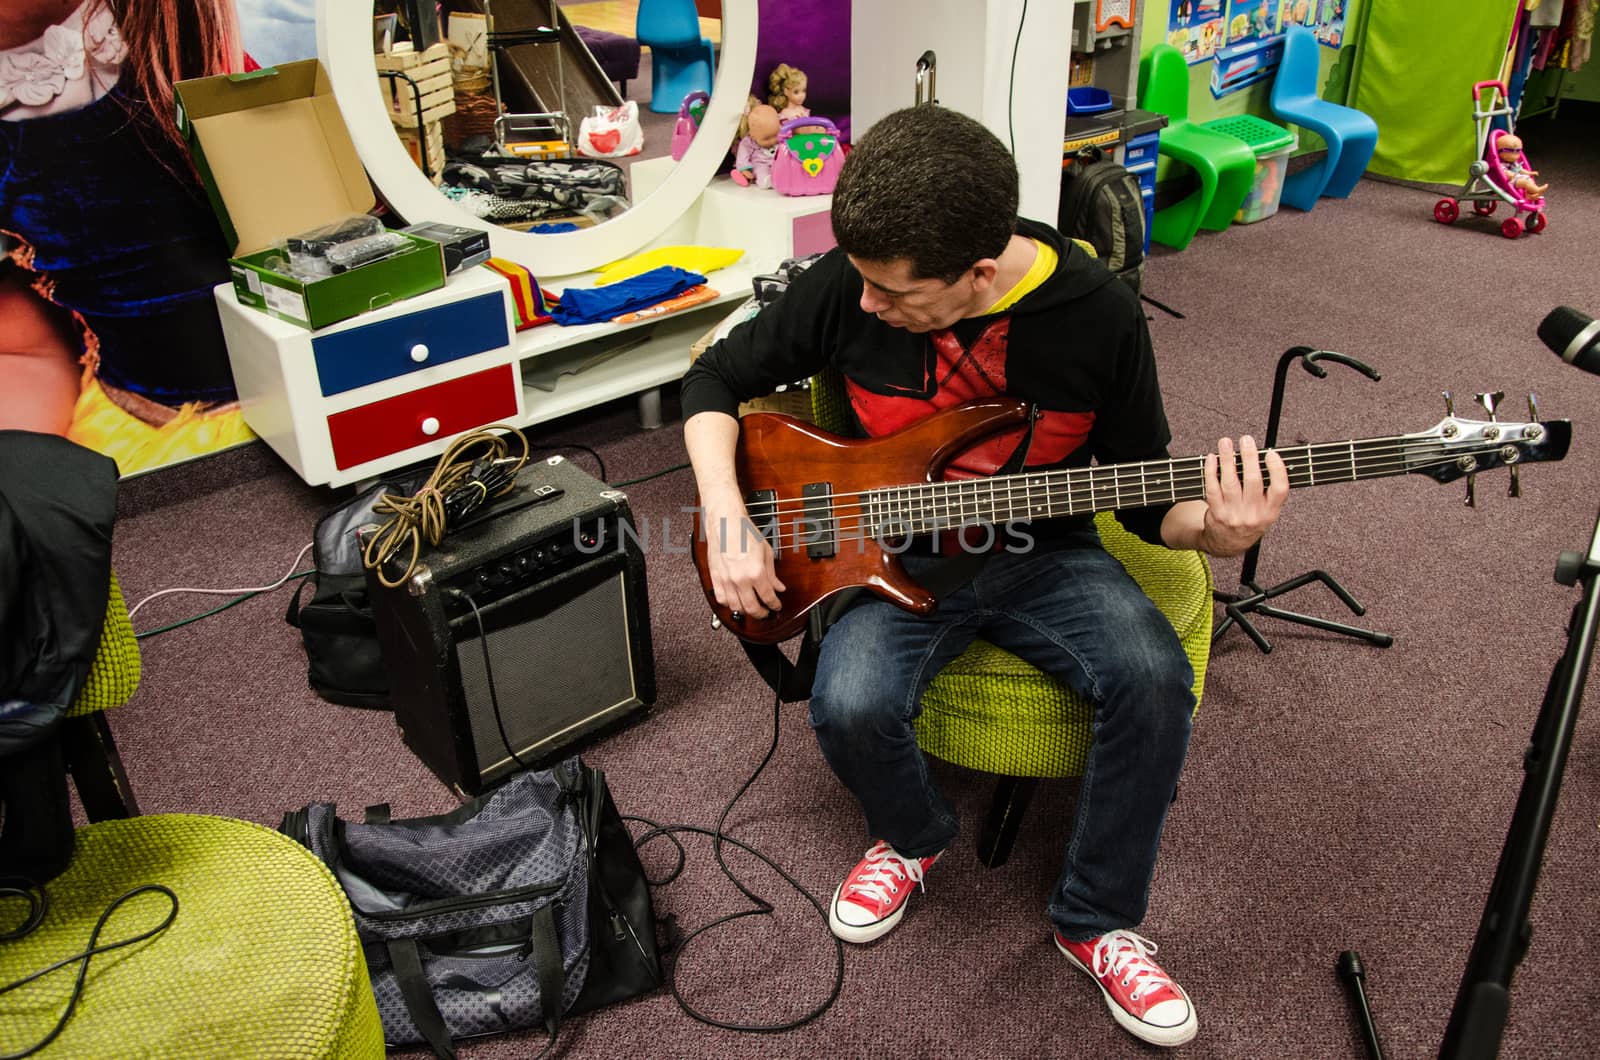 Singer Bass guitarist sitting testing his instrument